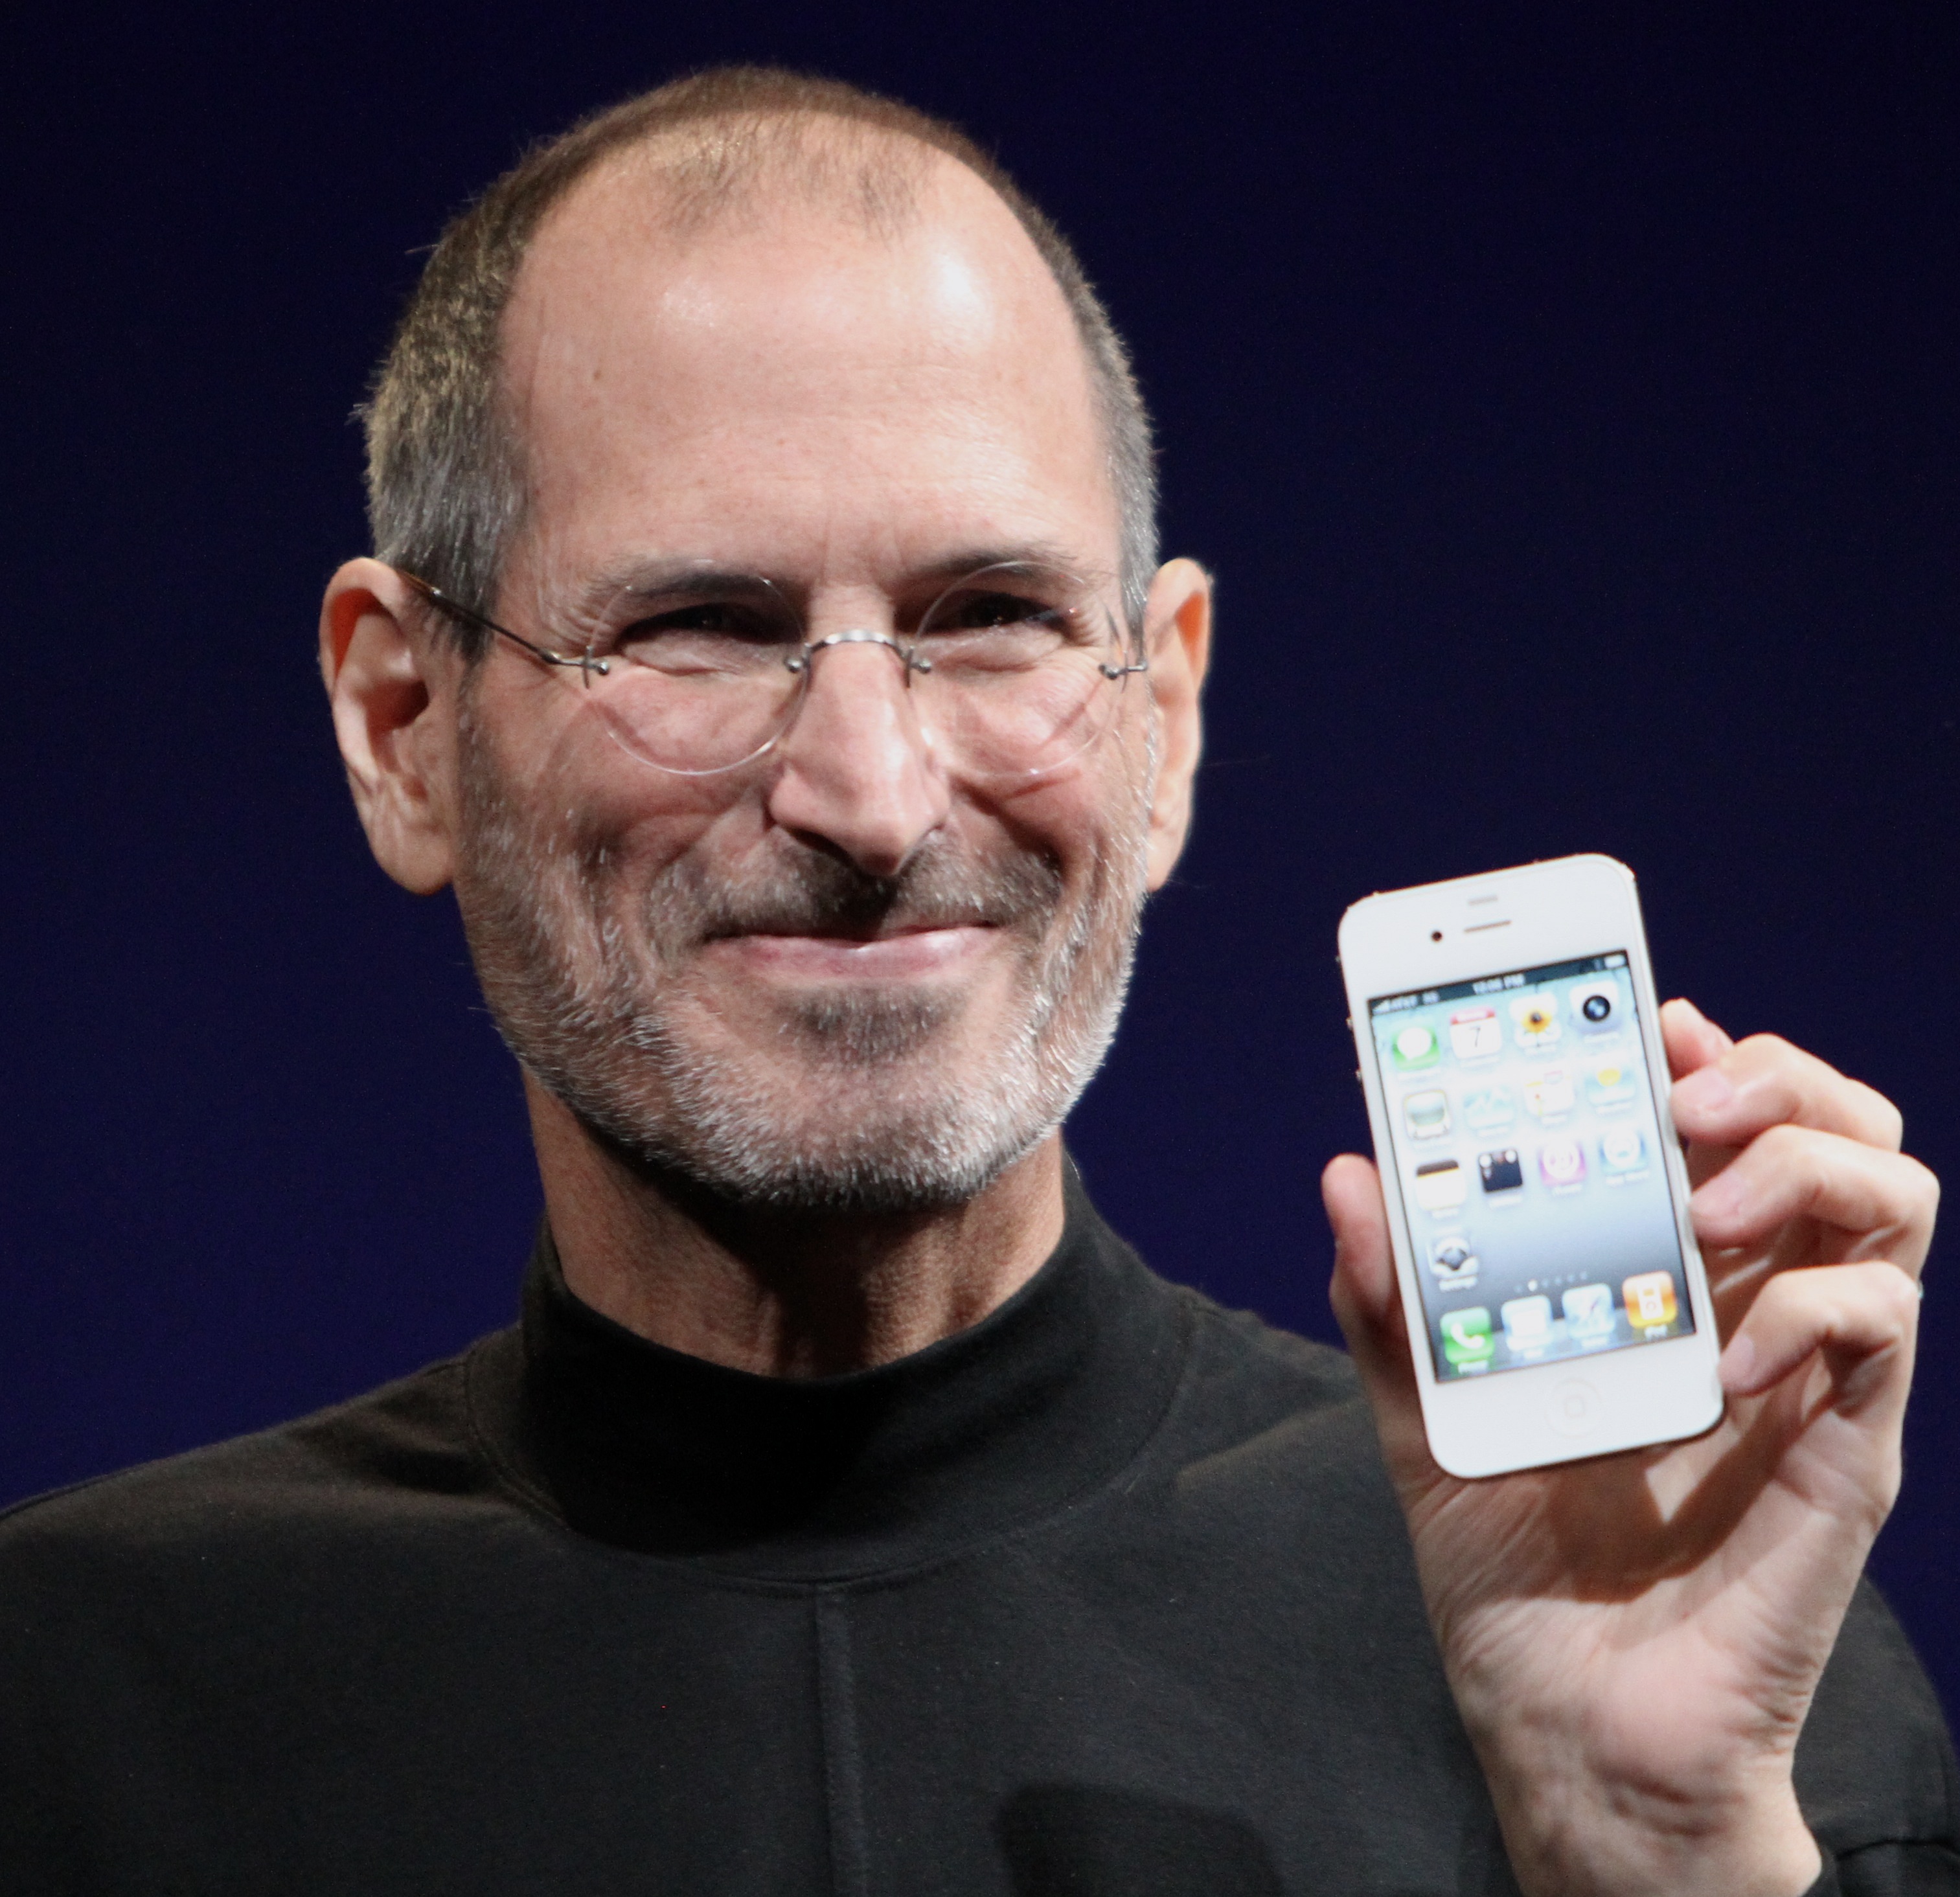  Biographie de Steve Jobs